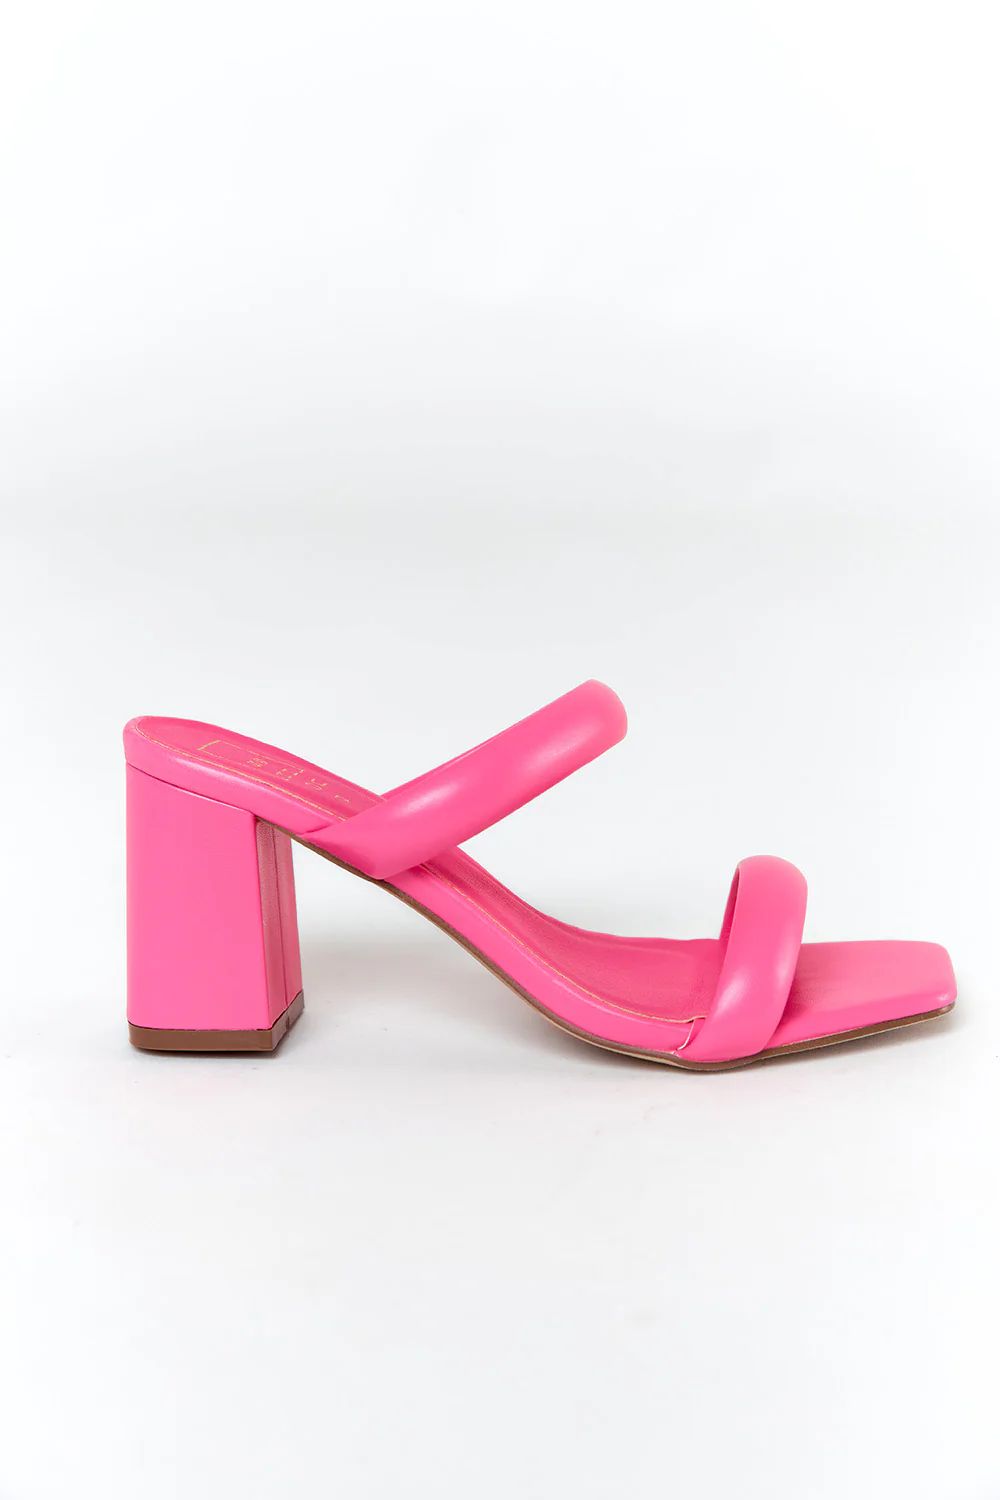 BuddyLove X ShuShop | Farah Heels | Bright Pink | BuddyLove